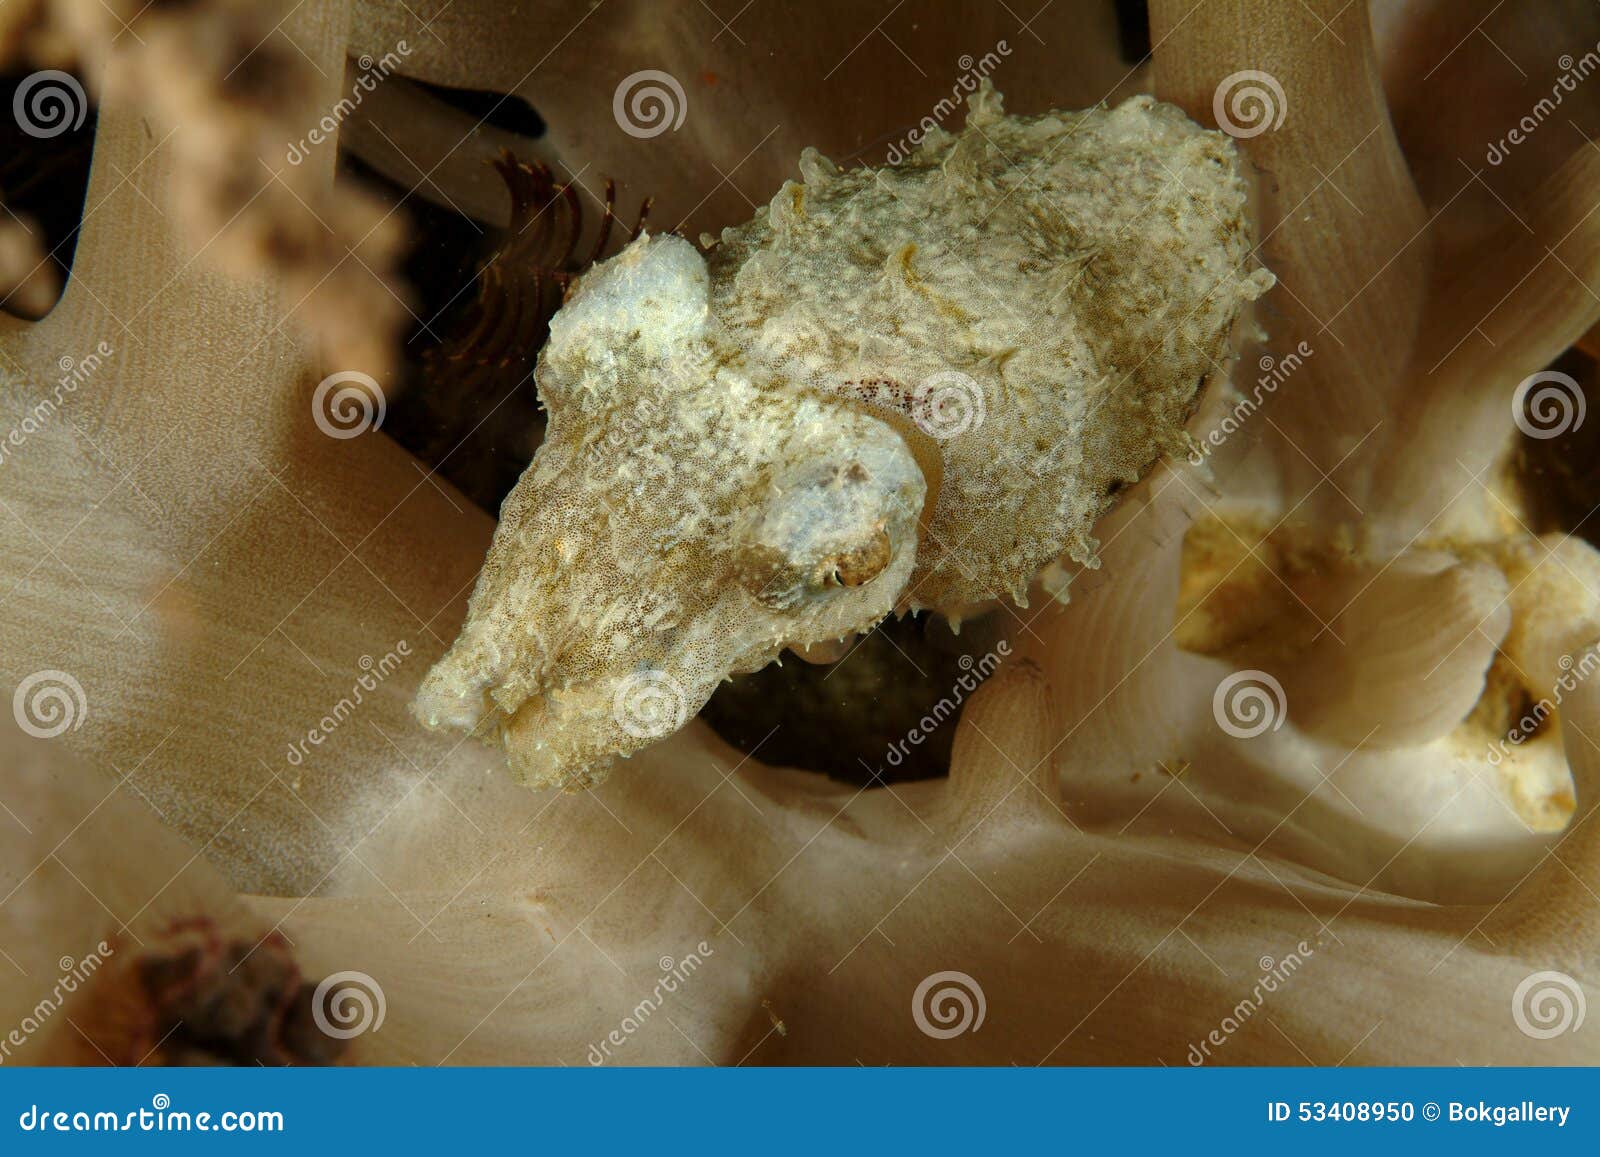 baby cuttlefish, perhentian island, terengganu